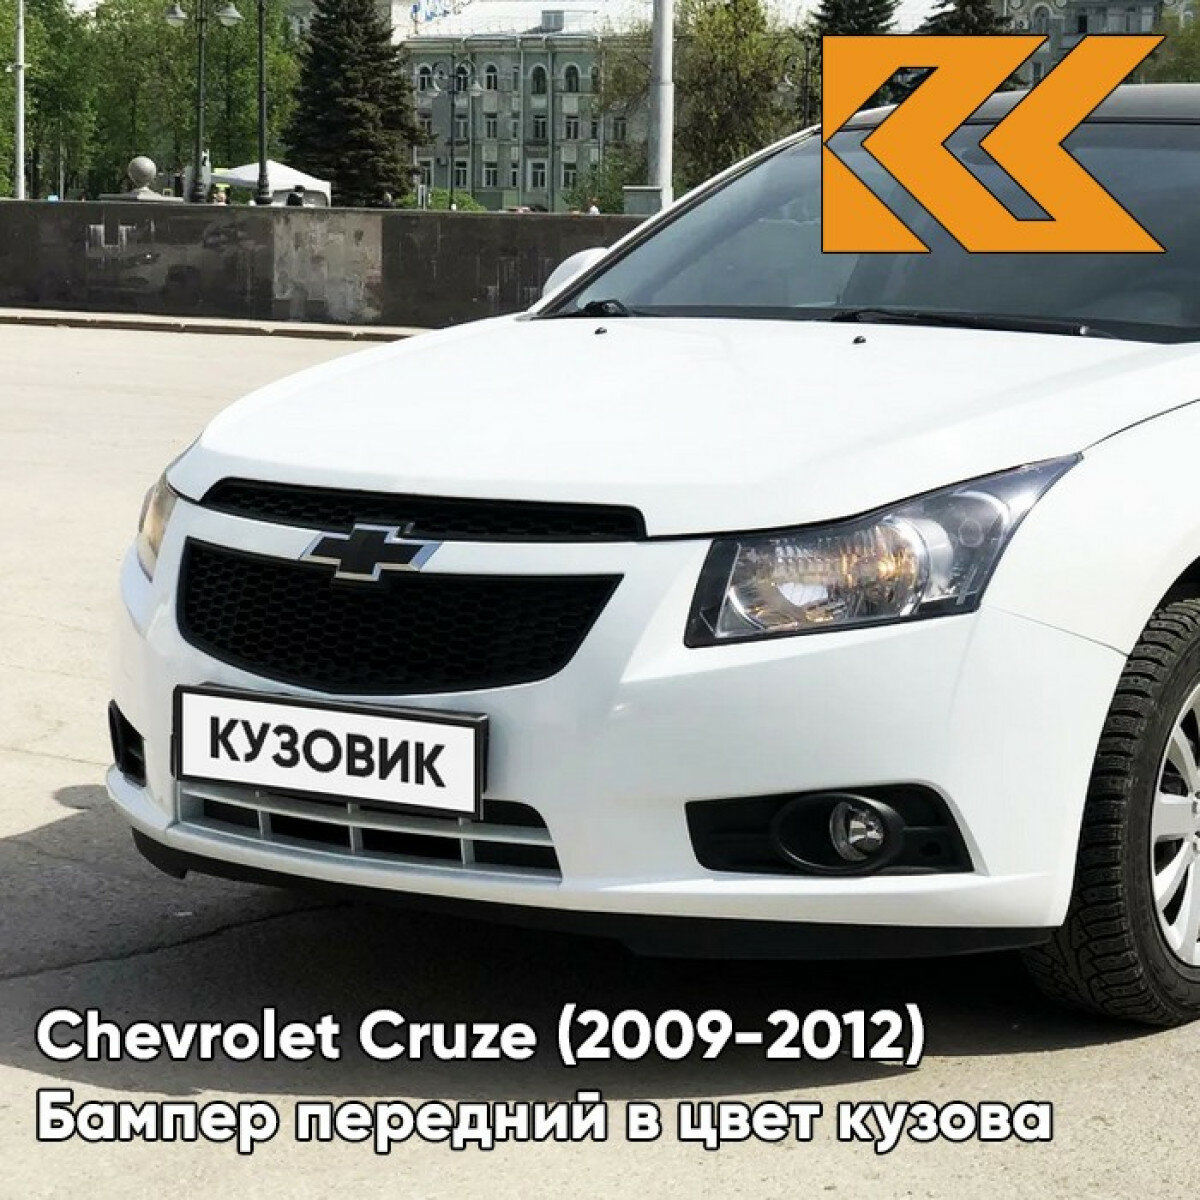 Бампер передний в цвет кузова Chevrolet Cruze Шевроле Круз (2009-2012) GAZ - Summit White - Белый